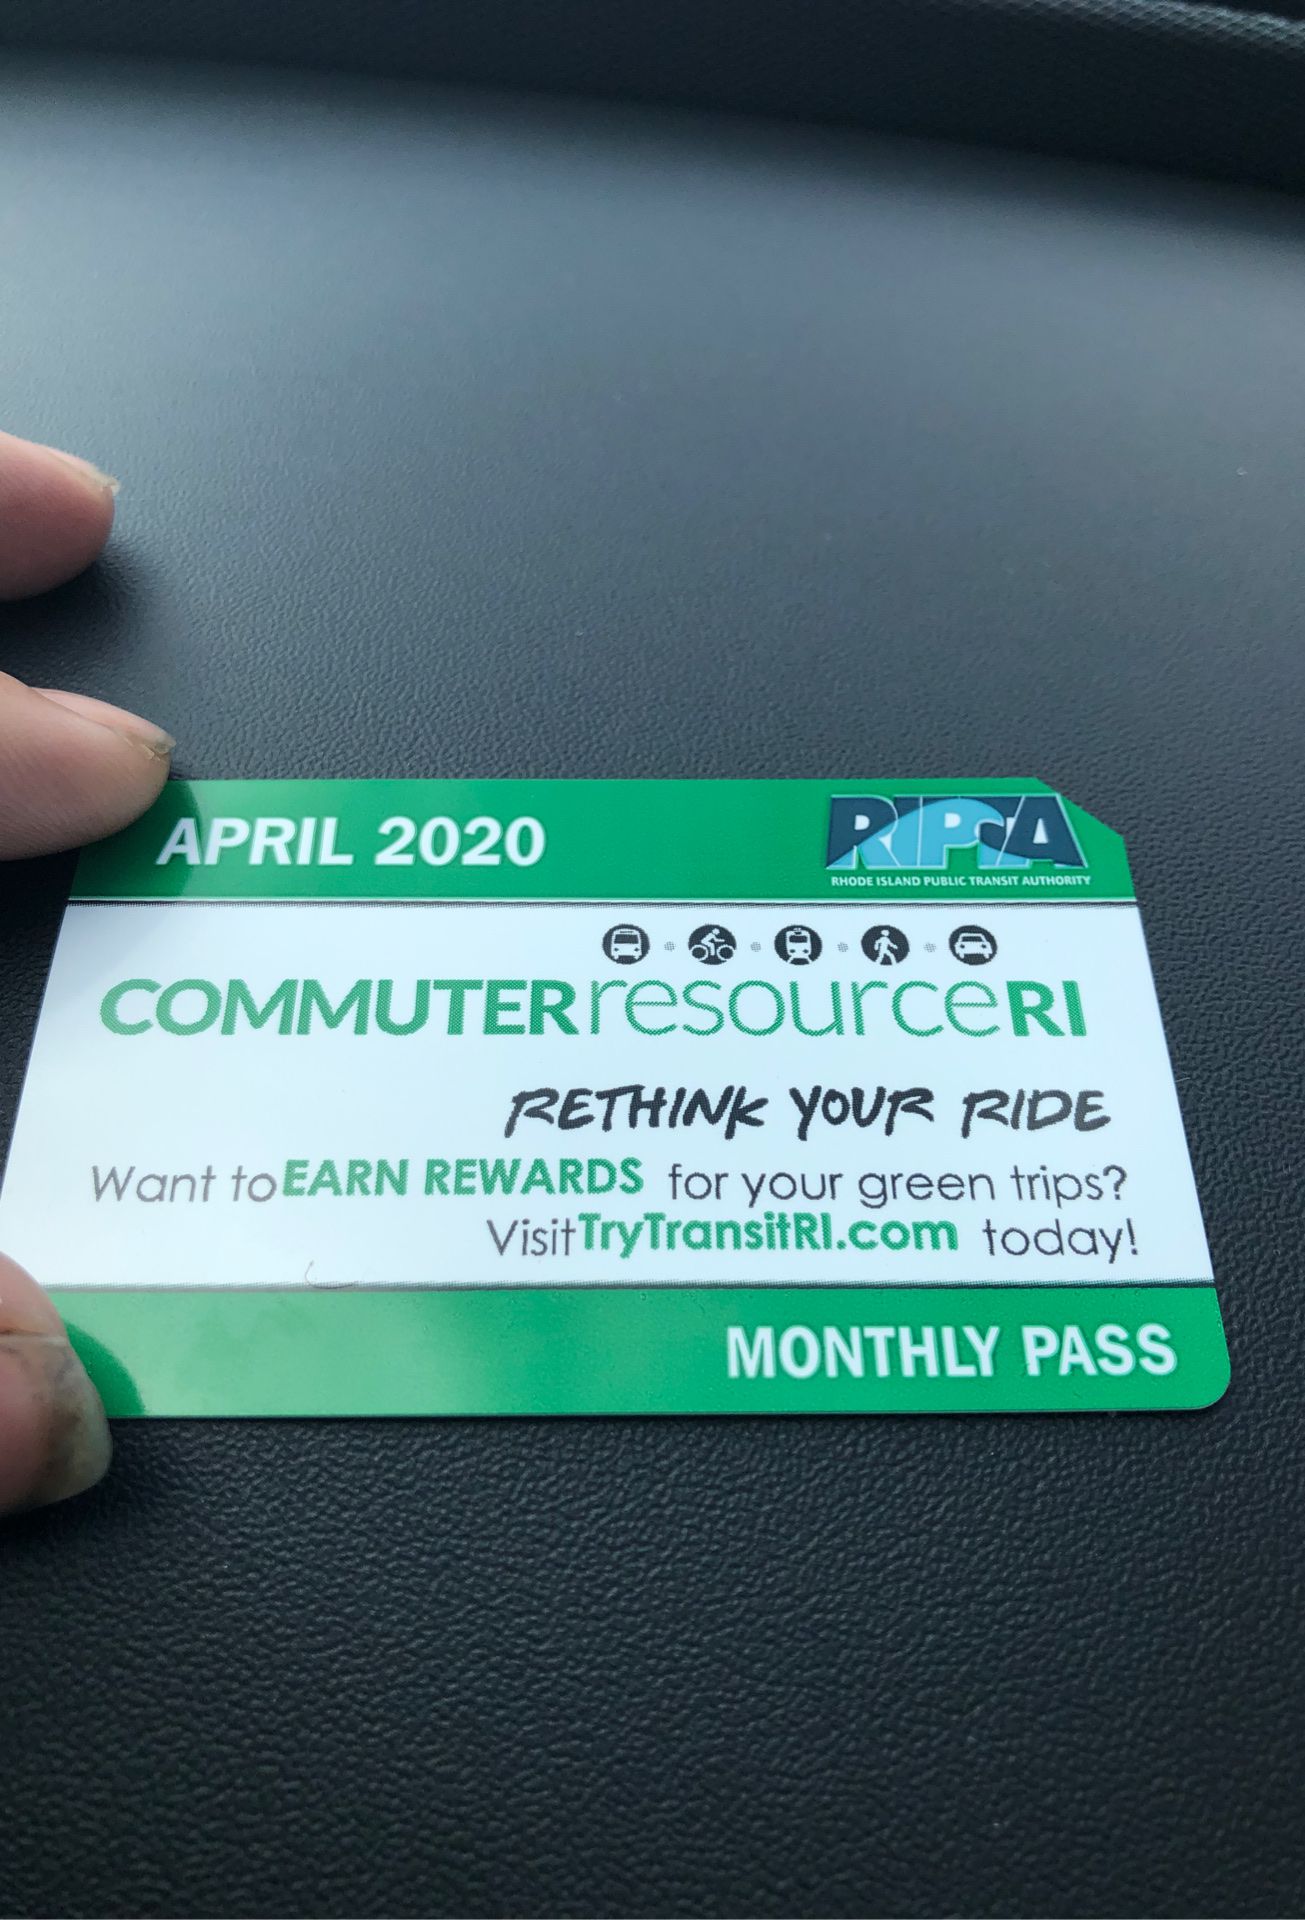 April bus pass 2020. Brand new